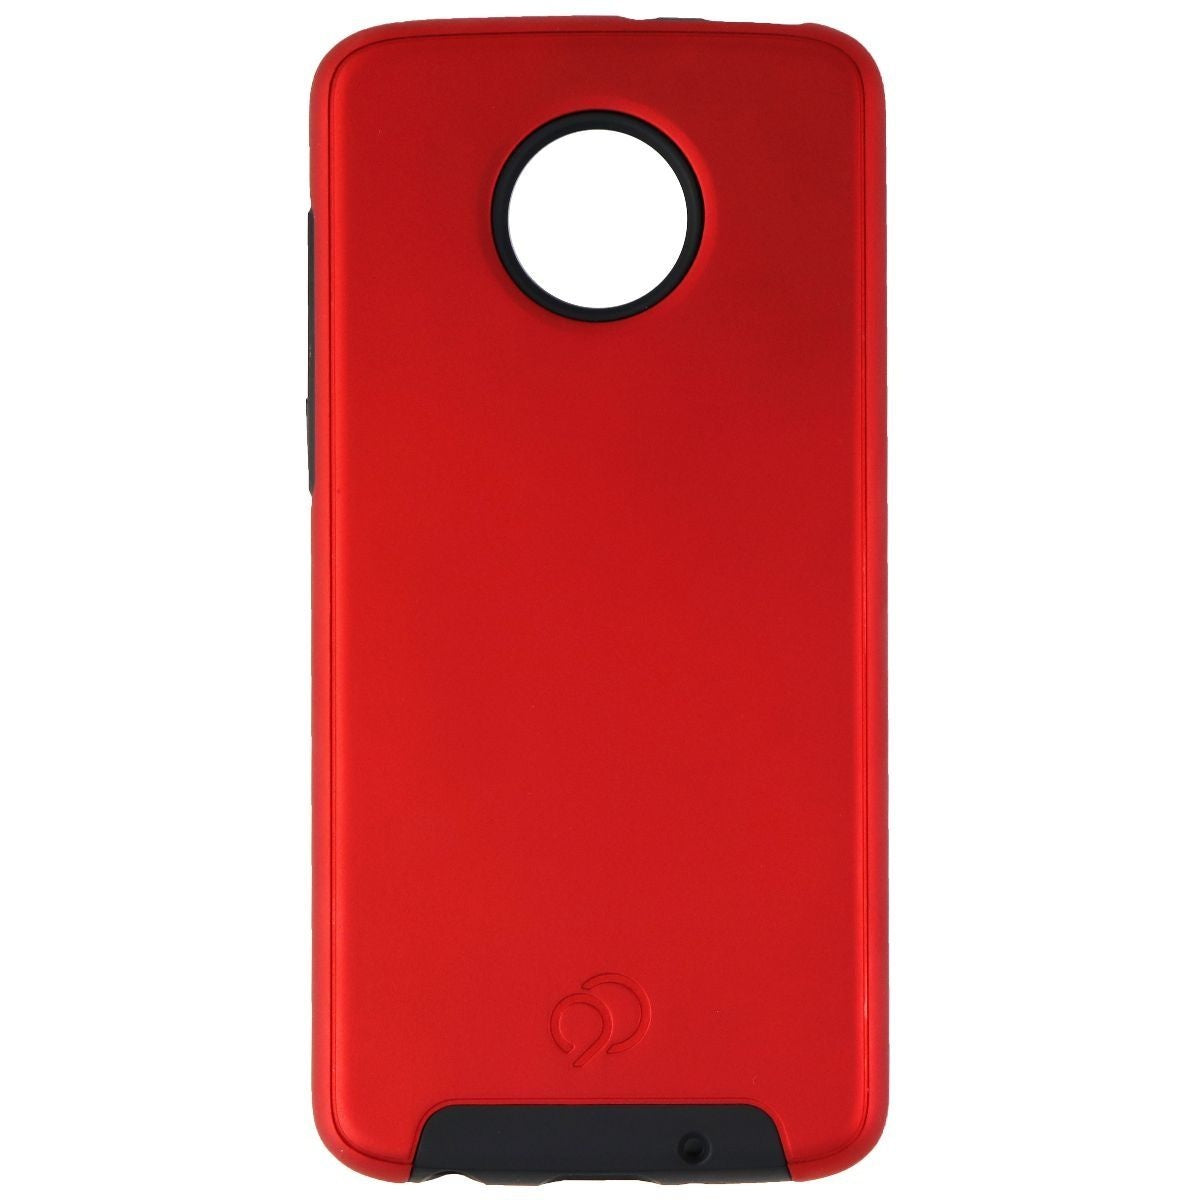 Nimbus9 Cirrus 2 Series Case for Motorola Moto Z4 - Crimson Red/Black Cell Phone - Cases, Covers & Skins Nimbus9    - Simple Cell Bulk Wholesale Pricing - USA Seller